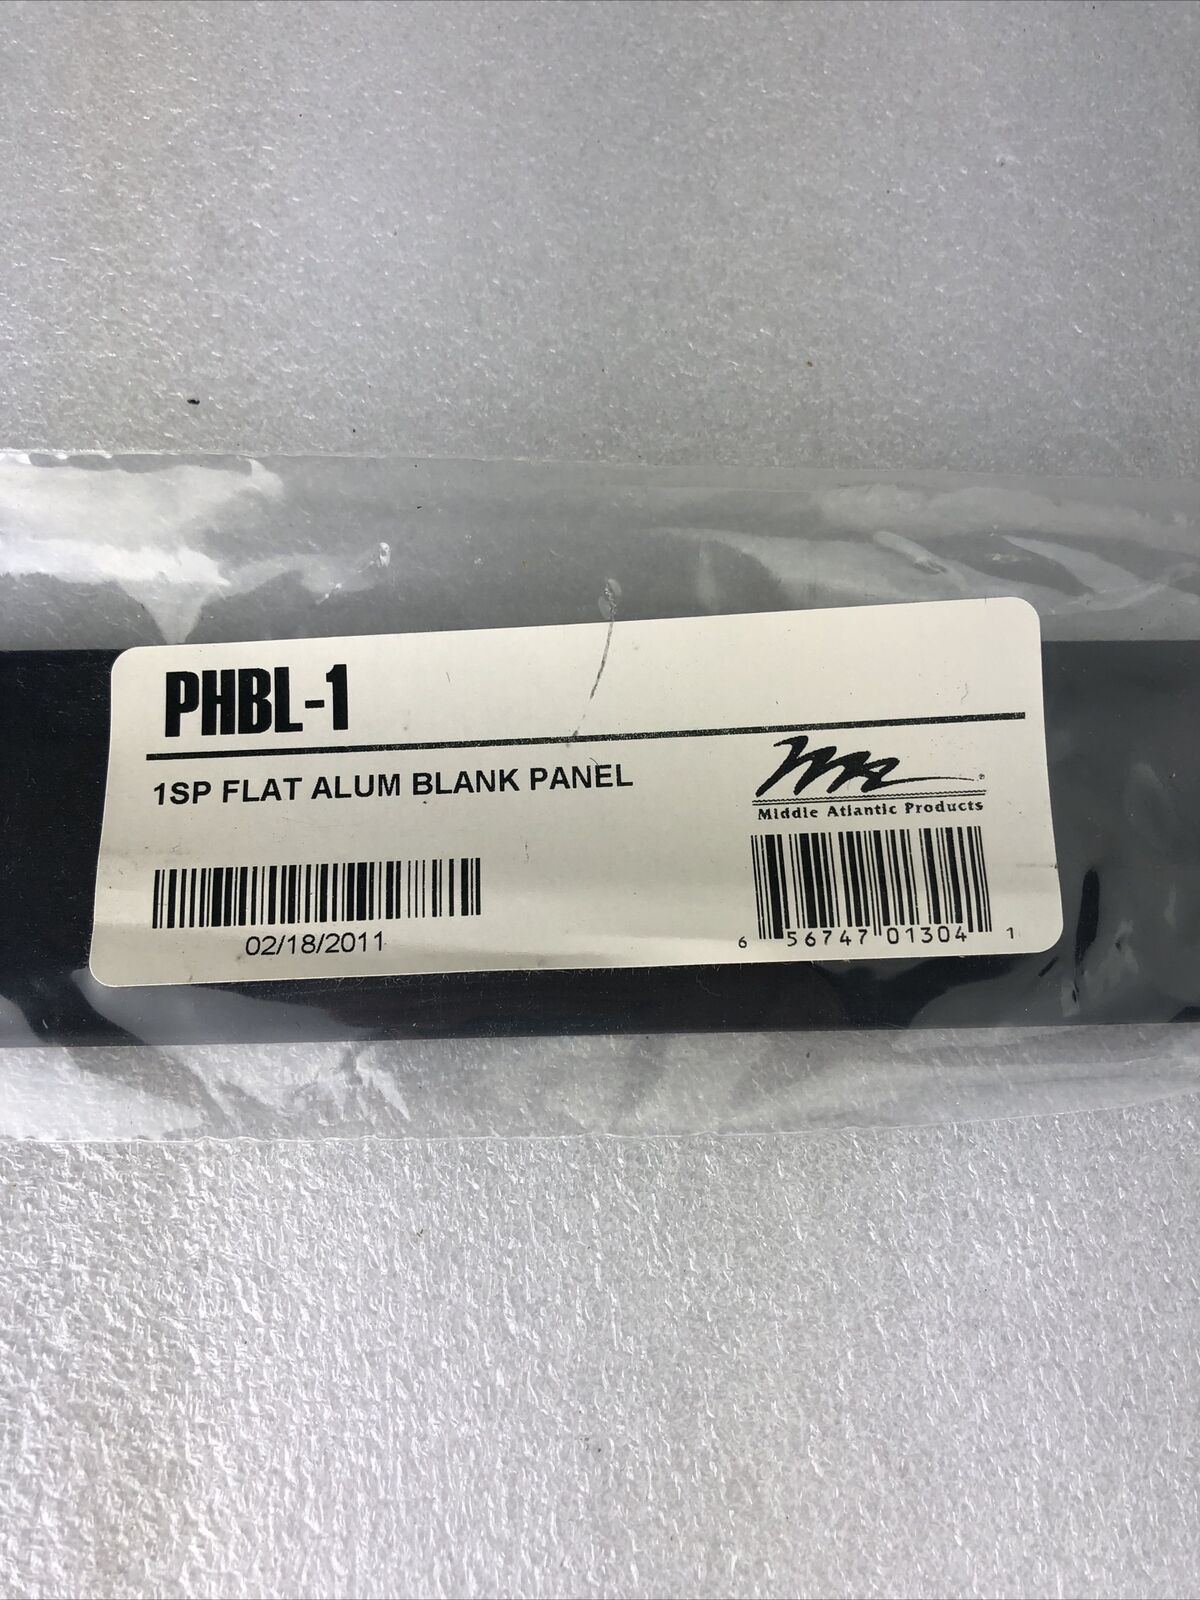 Middle Atlantic Products PHBL-1 1SP Flat Alum Blank Panel